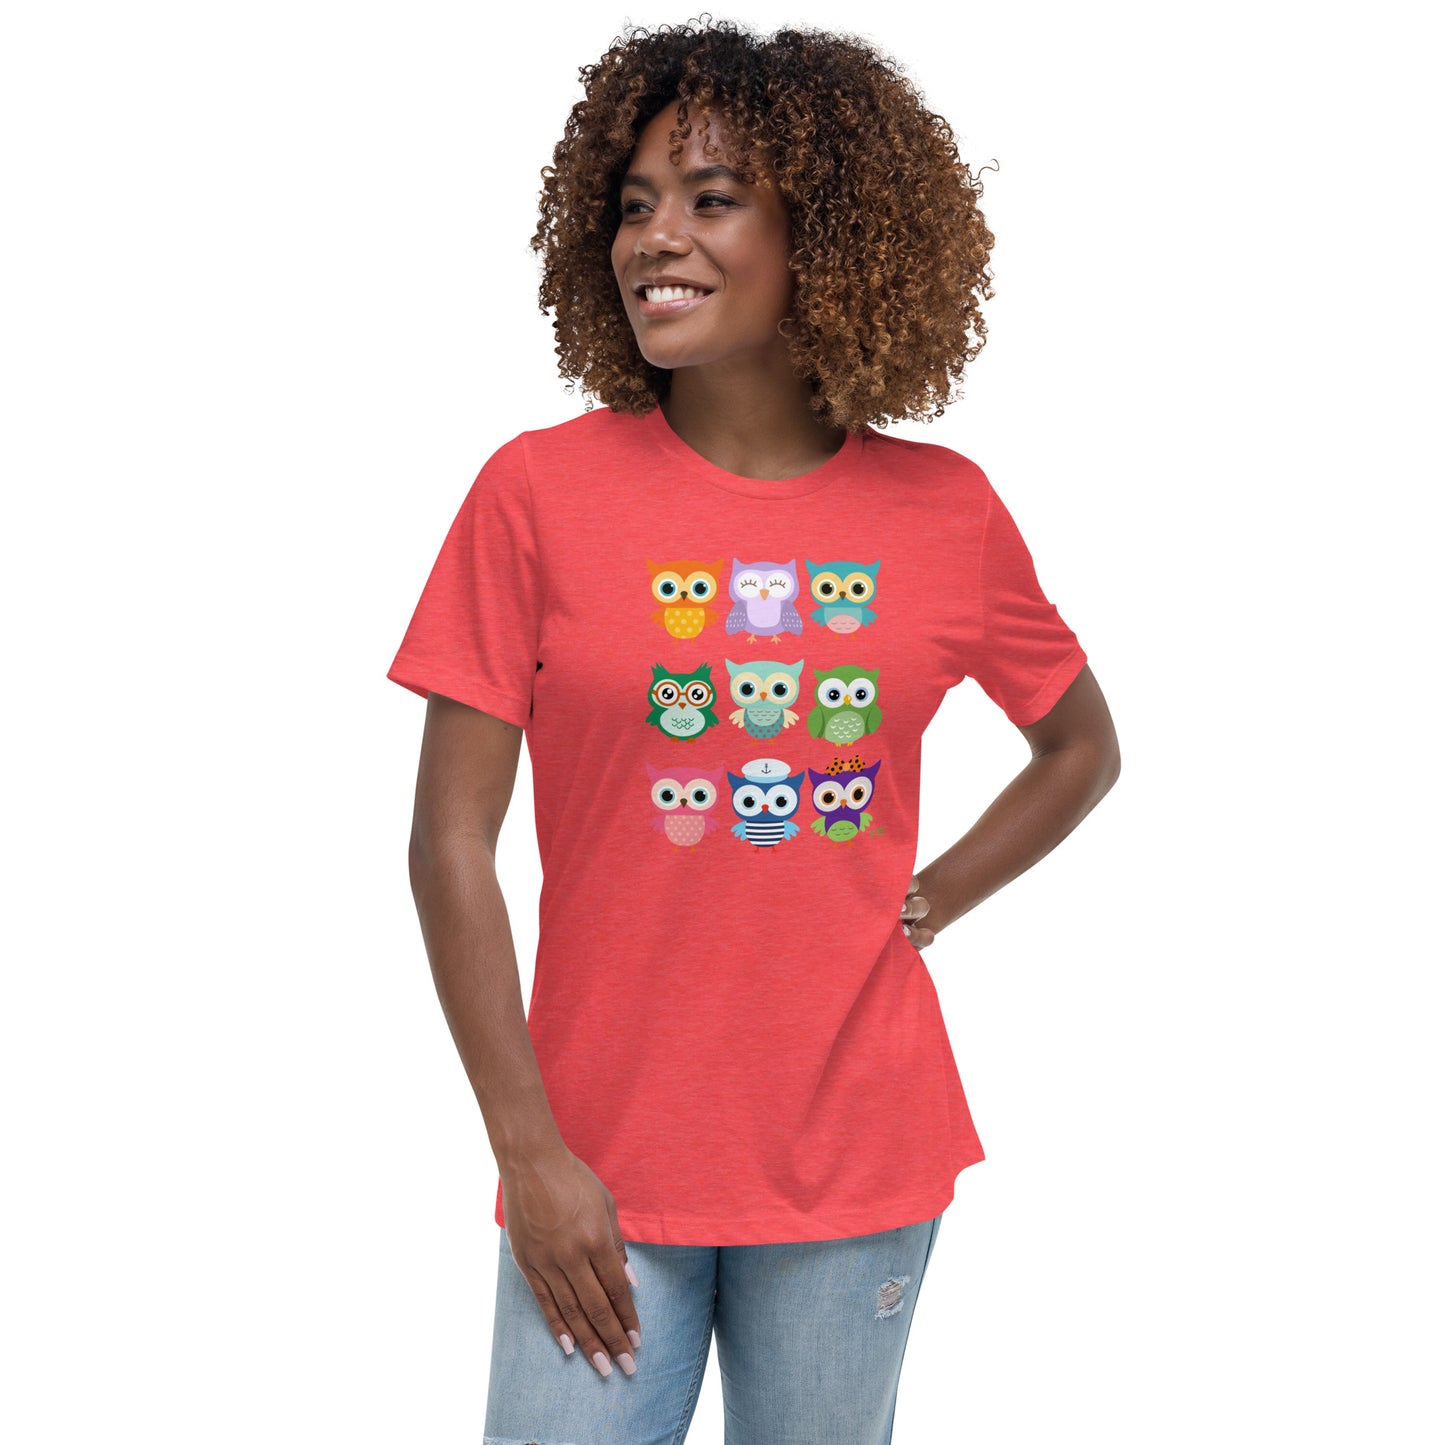 Women's Relaxed Soft & Smooth Premium Quality T-Shirt Baby Owls Design by IOBI Original Apparel